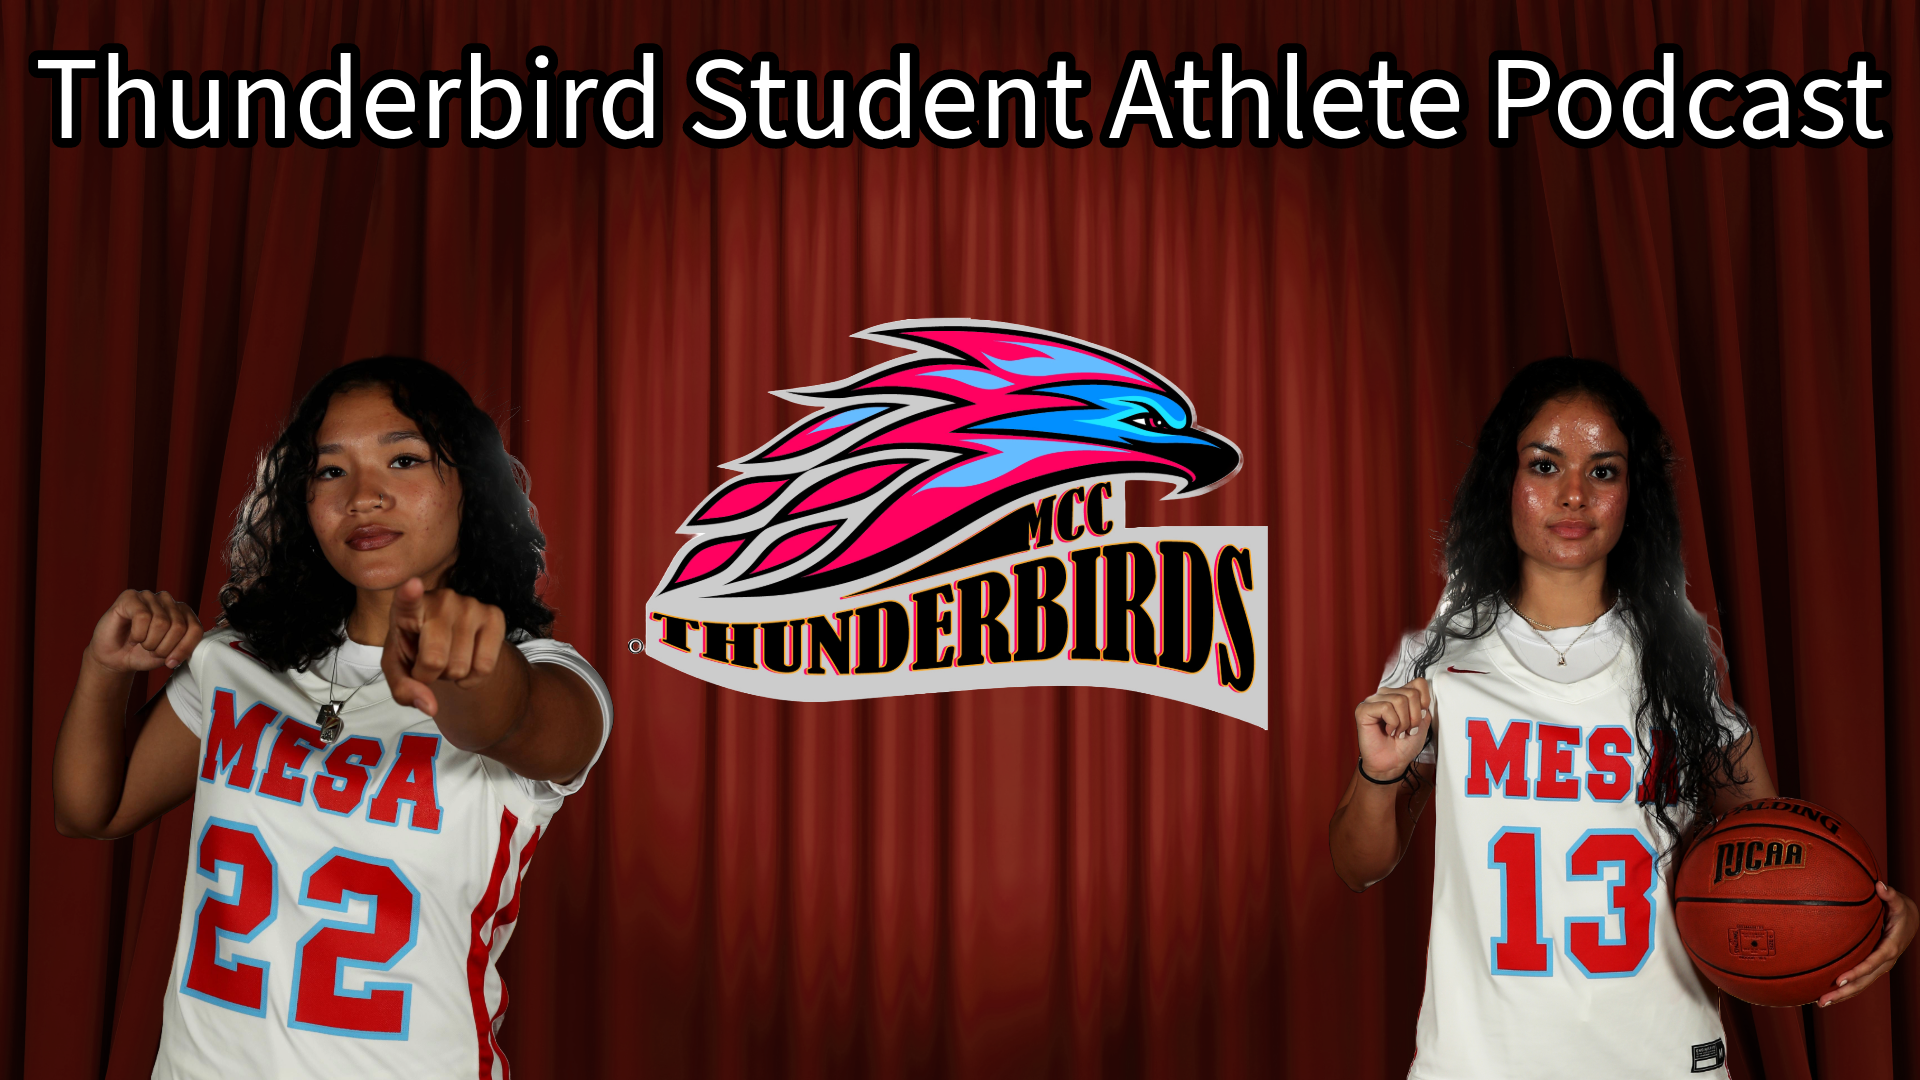 Thunderbird Student Athlete Podcast...Featuring Aaliyah Garcia and Ashiian Hunter